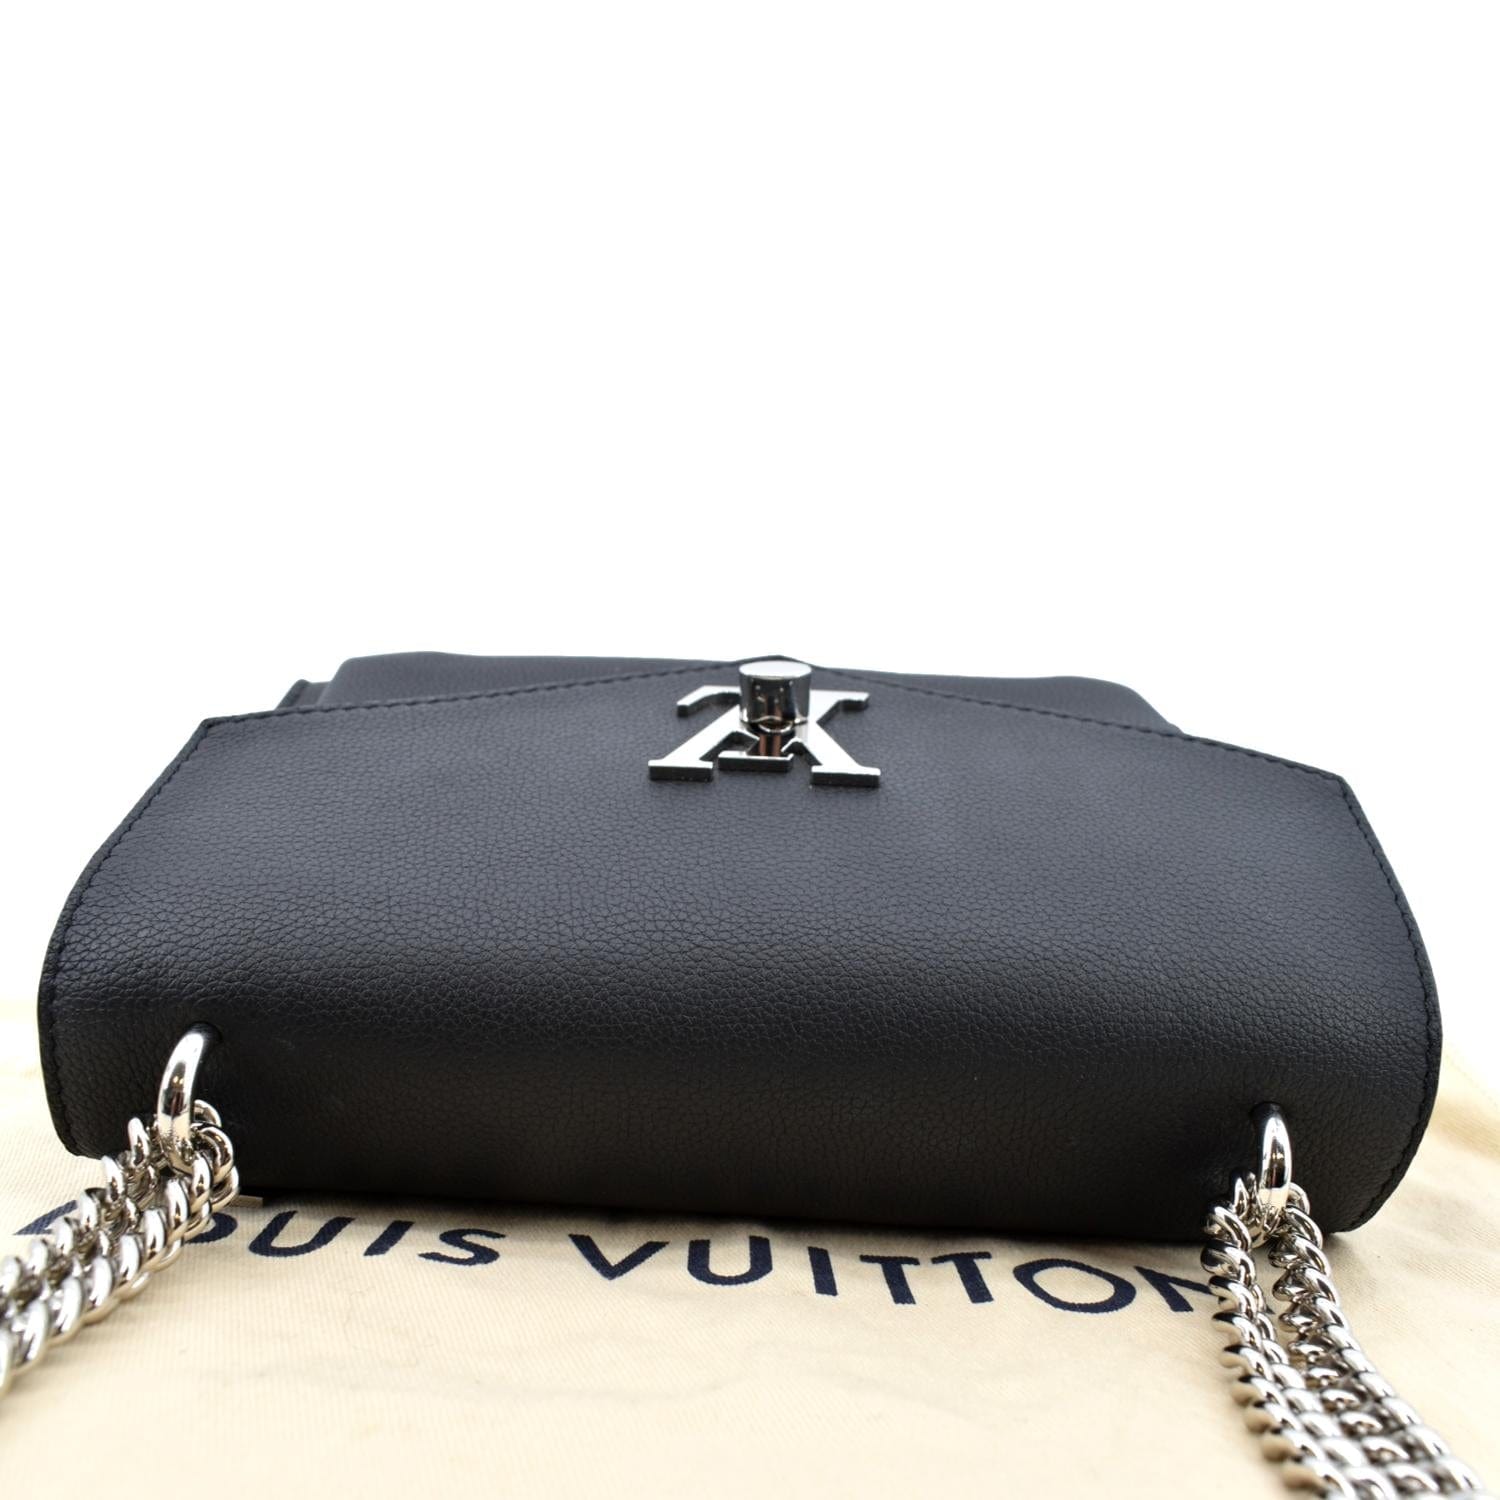 Louis Vuitton Lockme Chain Bag East West Black Calf